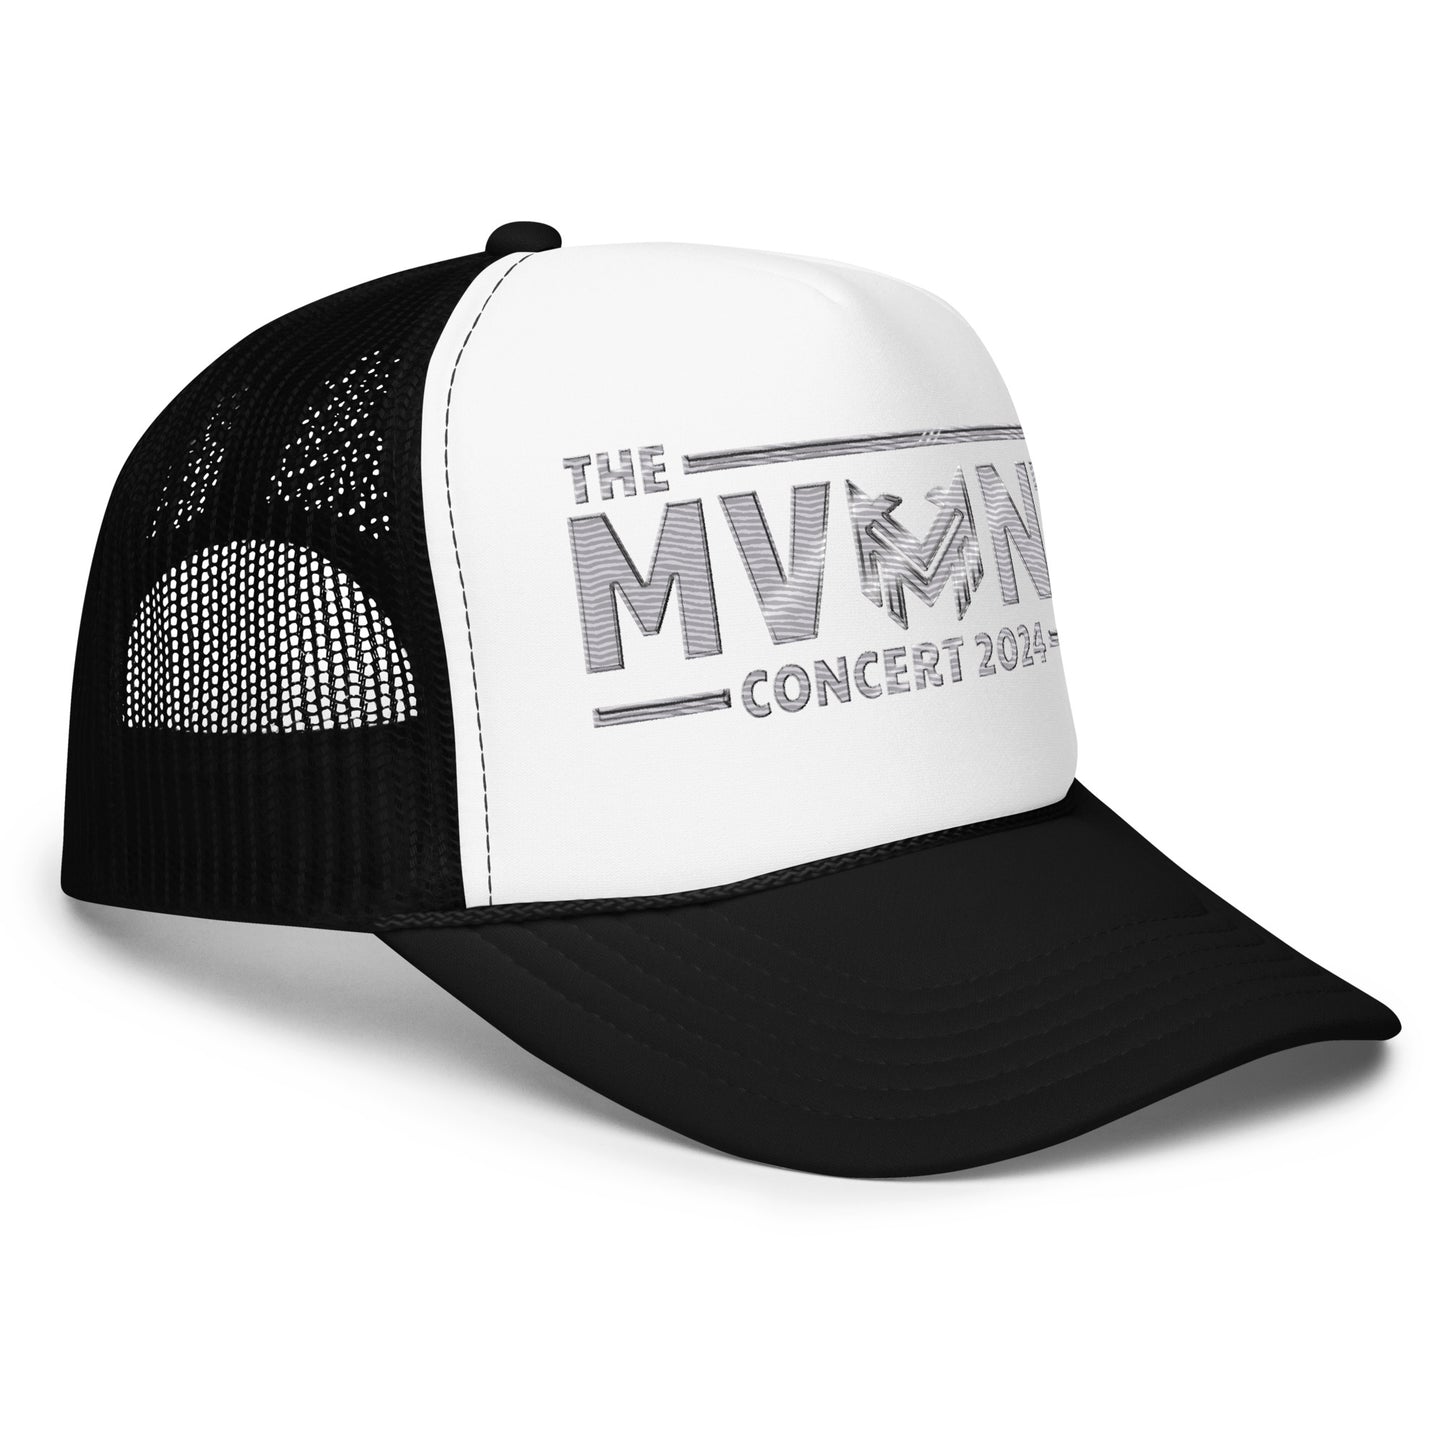 Official The MVMNT Concert '24 Foam Trucker (3 colors)